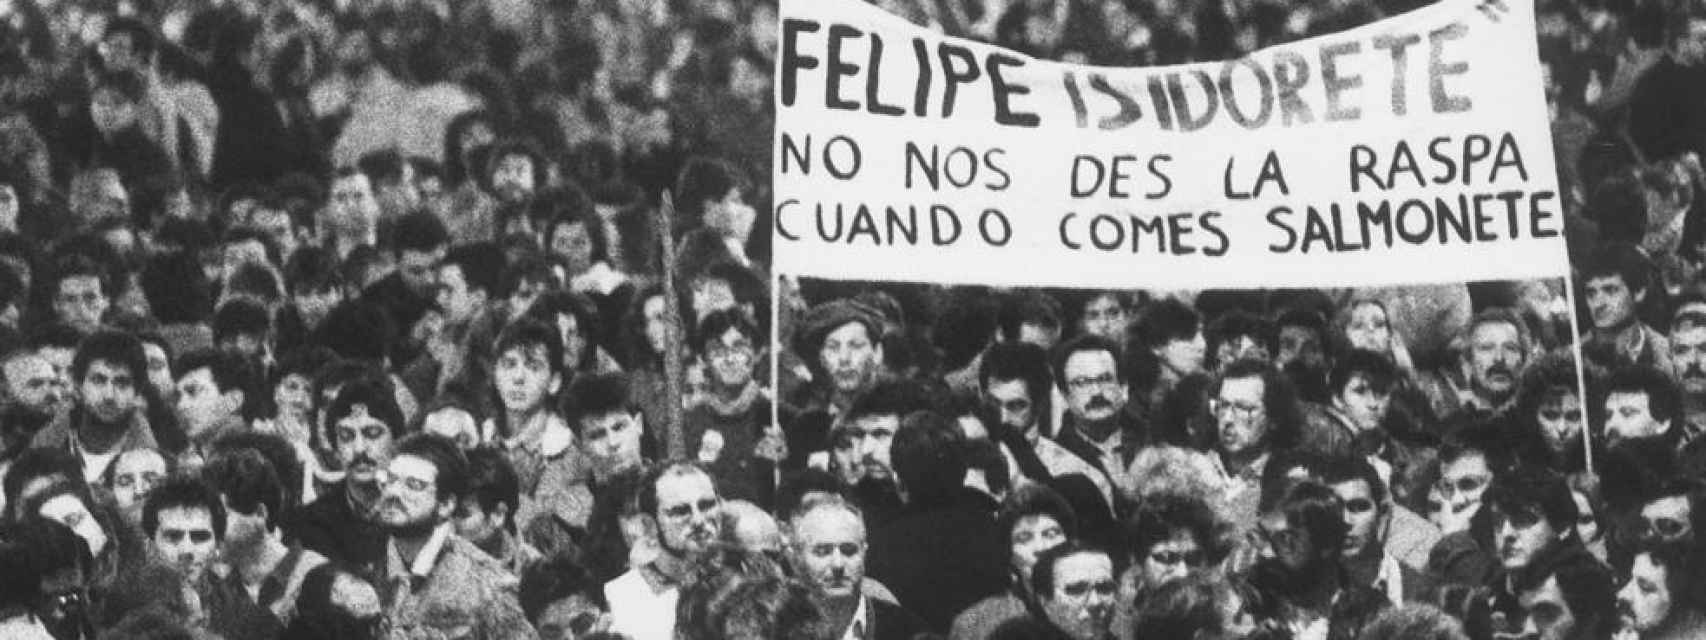 Imagen de la huelga general de 1988 que paralizó España.